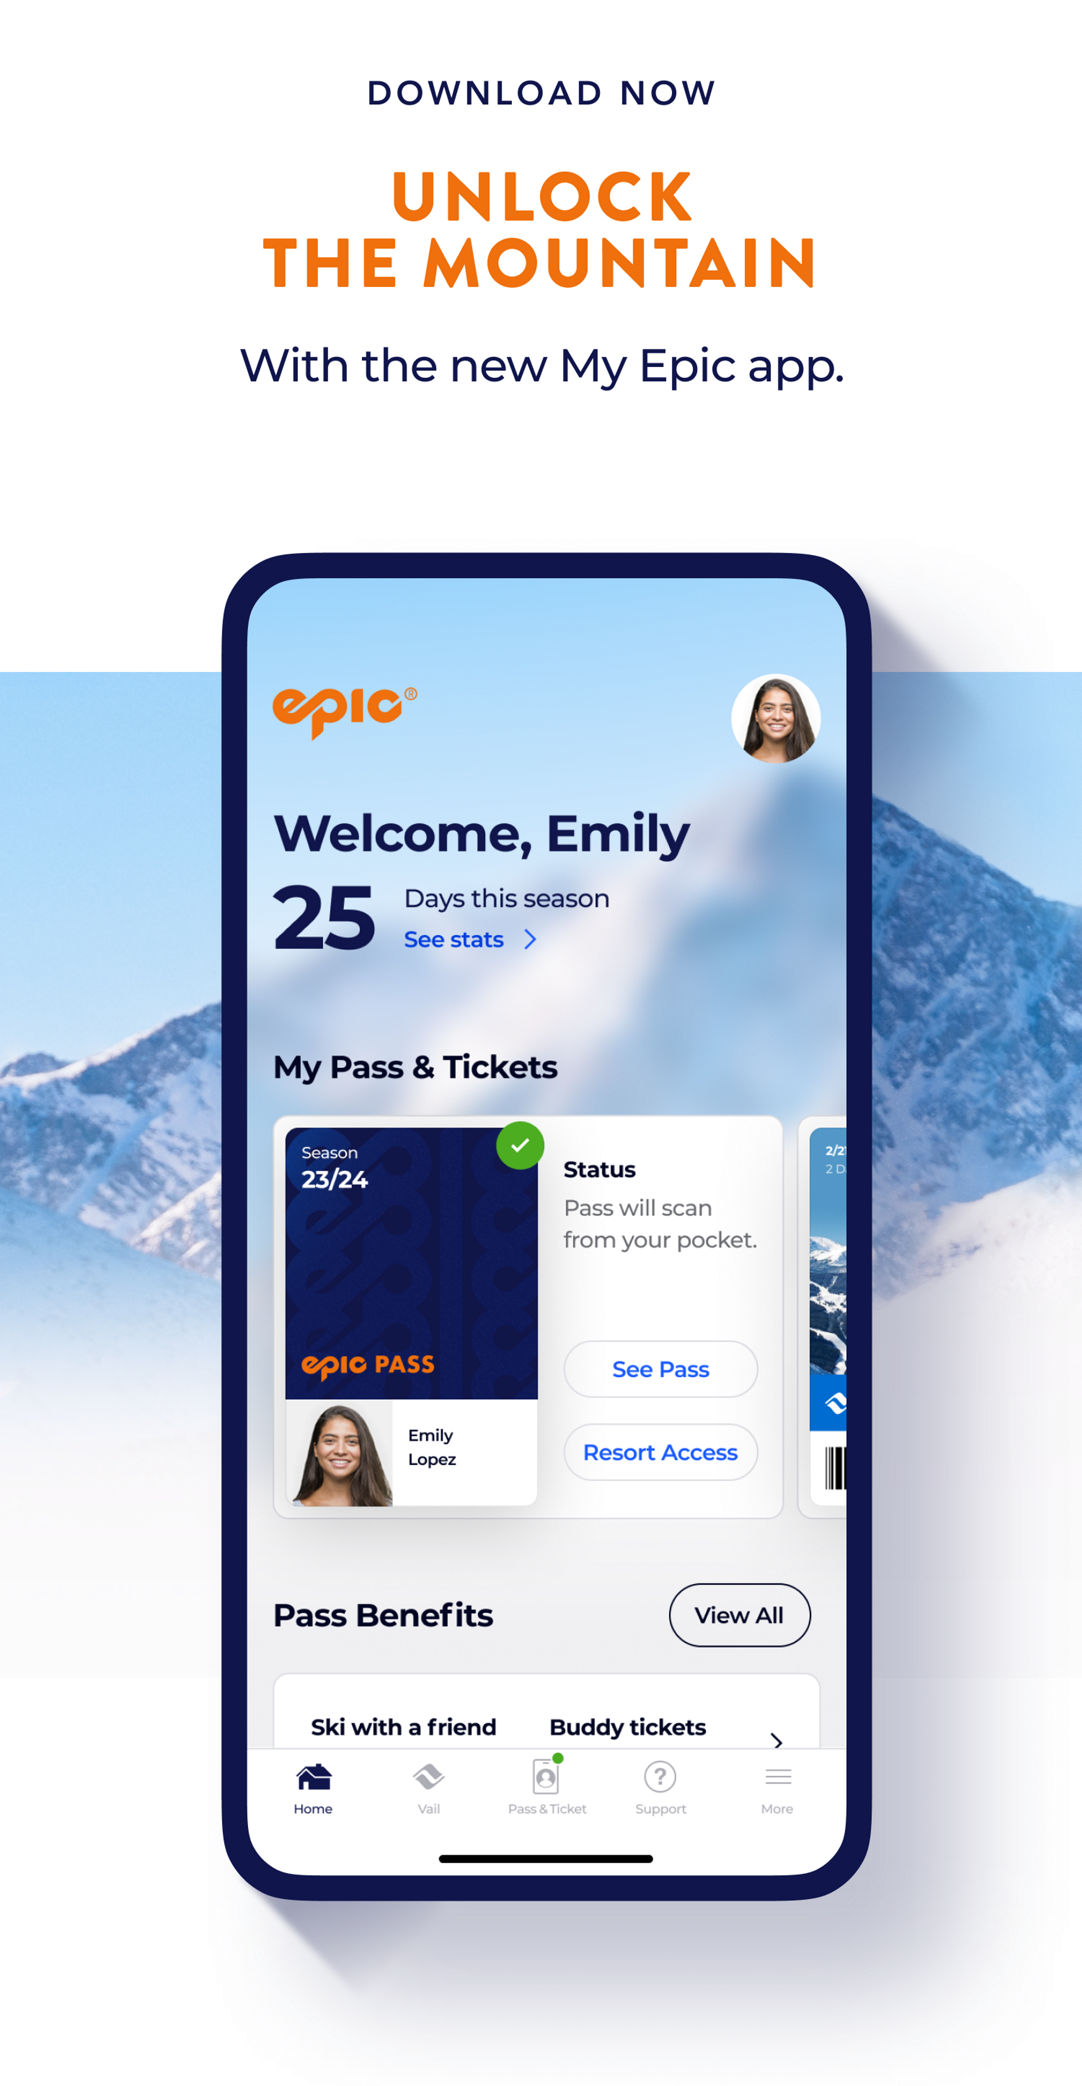 The Epic Card Game Digital App